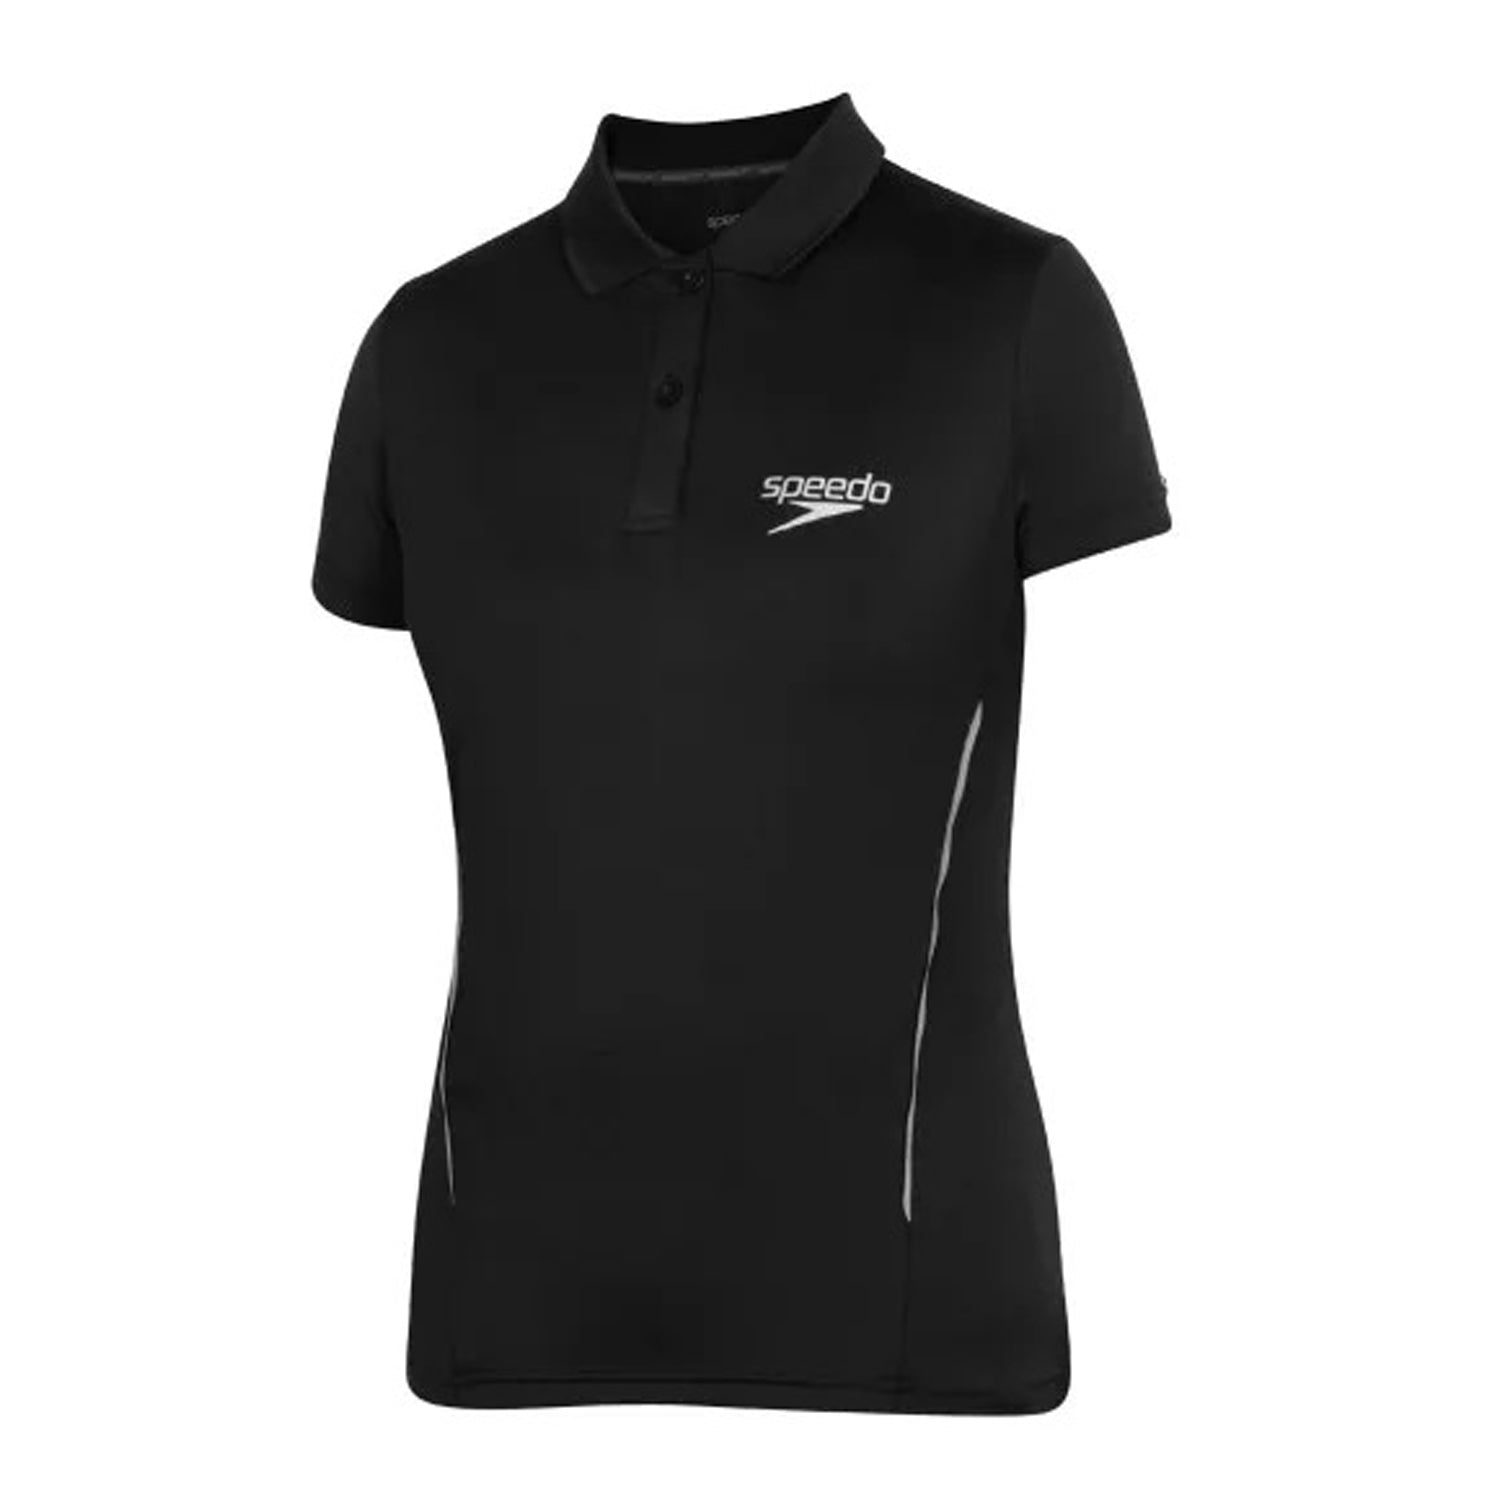 Speedo Dry Polo T-Shirt (Black/Silver) - Best Price online Prokicksports.com